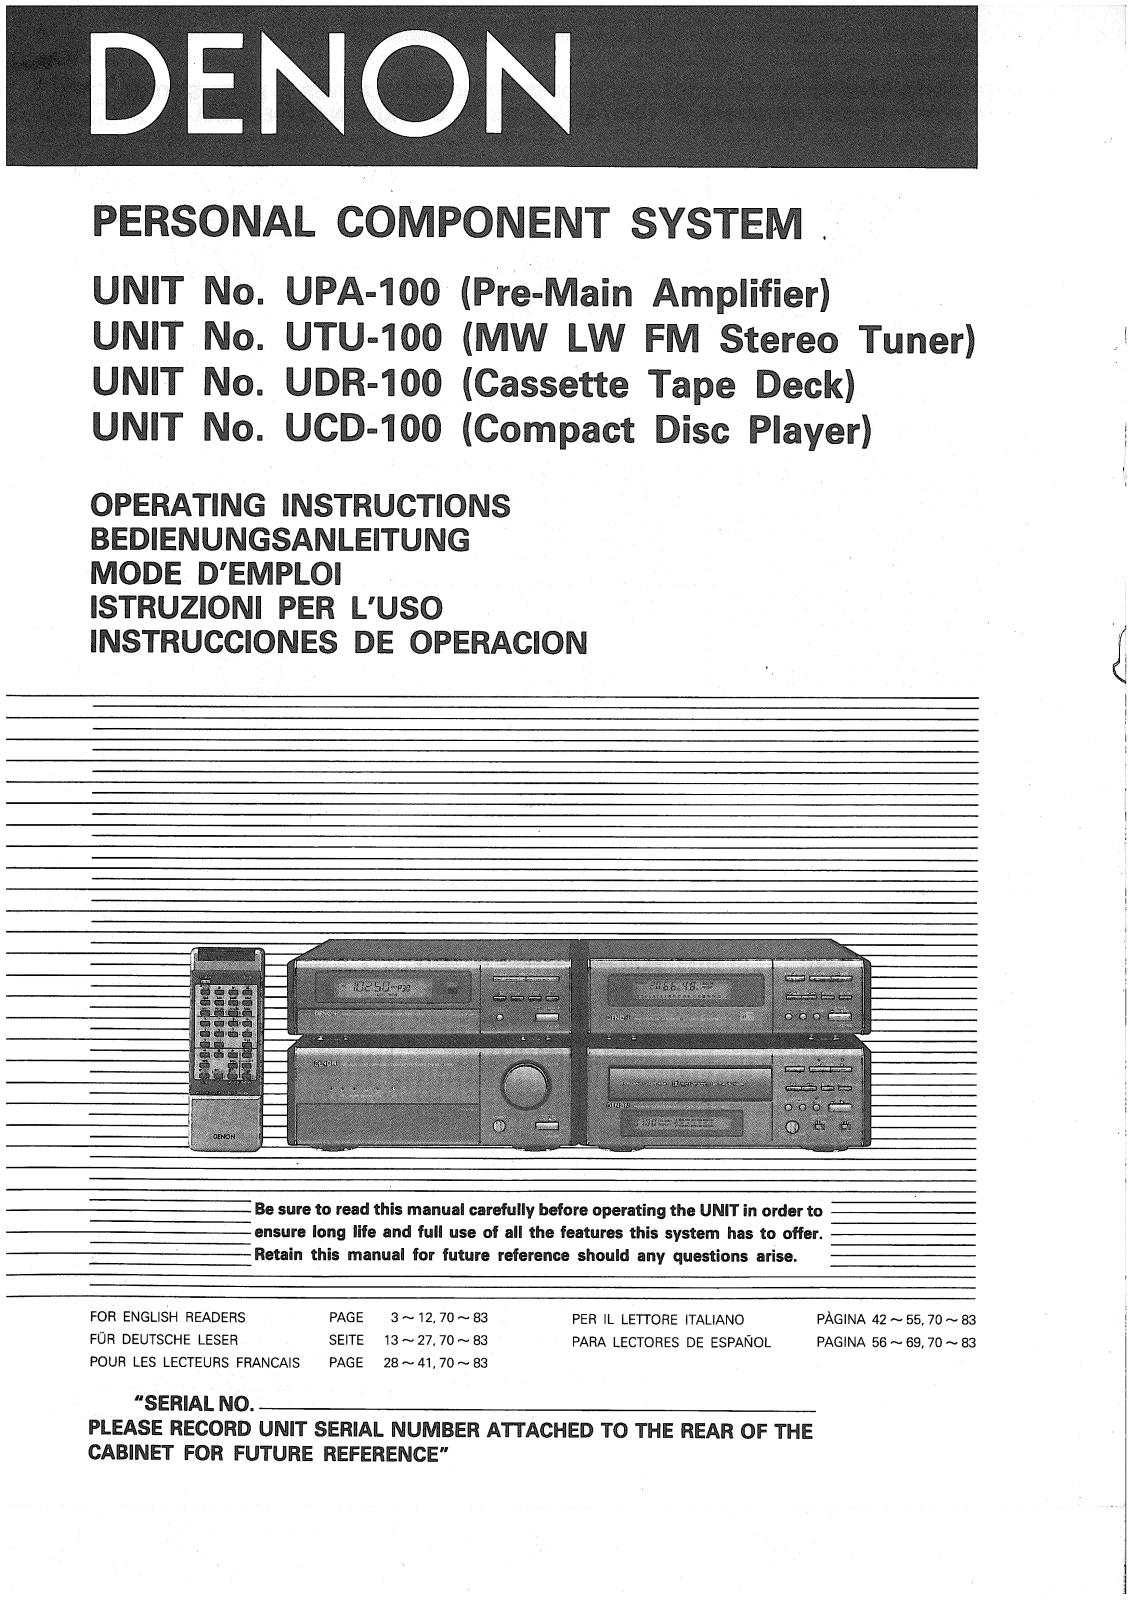 Denon UPA-100, UTU-100, UDR-100, UCD-100 Owner's Manual